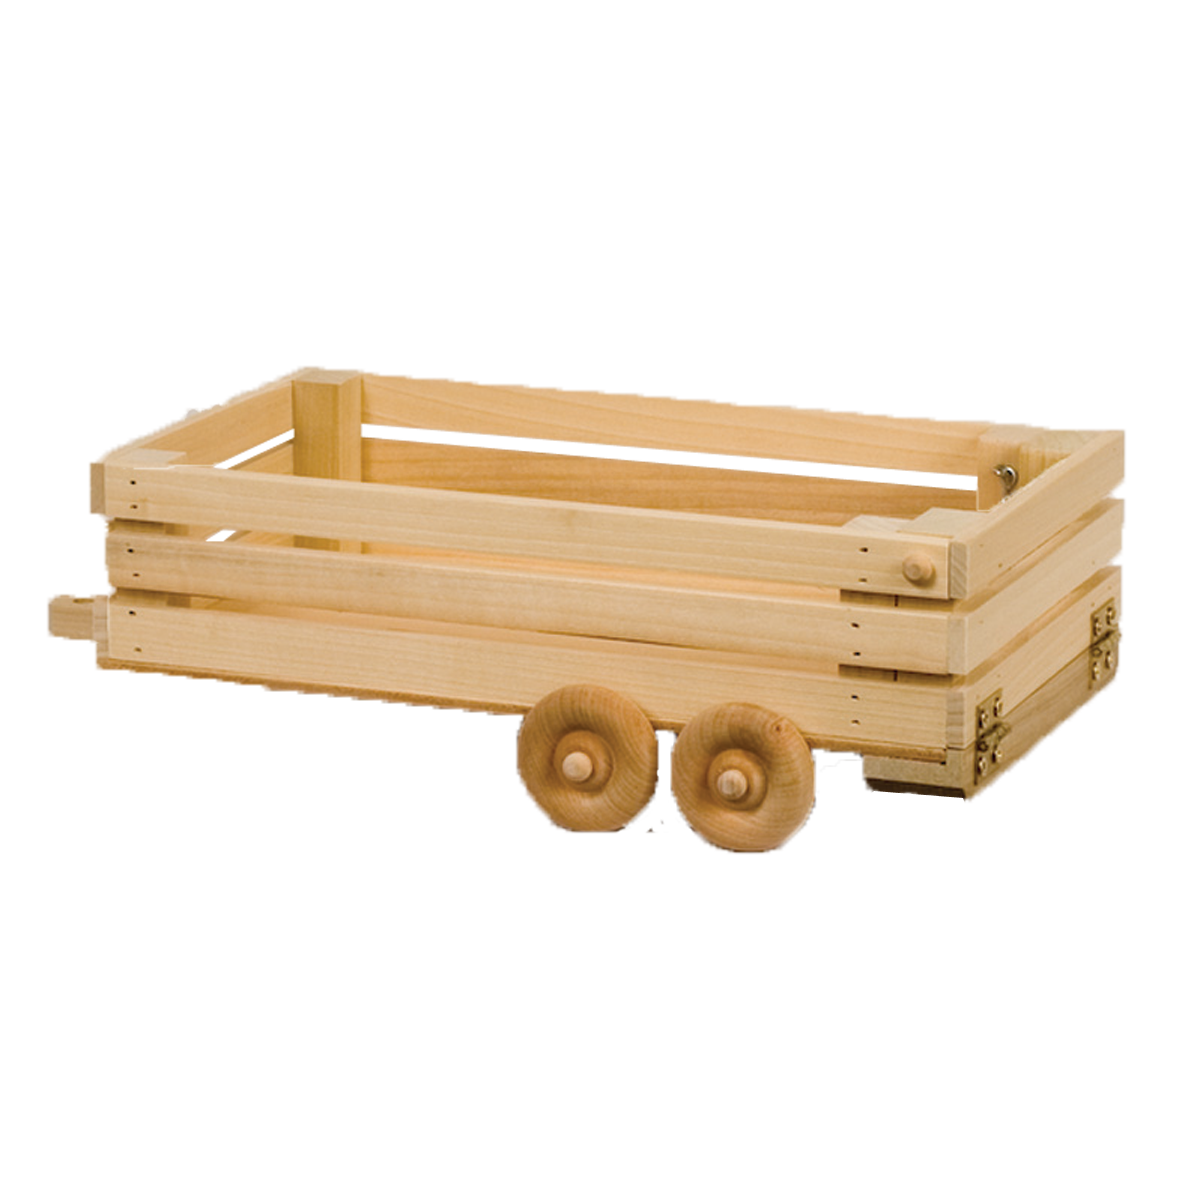 Livestock trailer wood toy